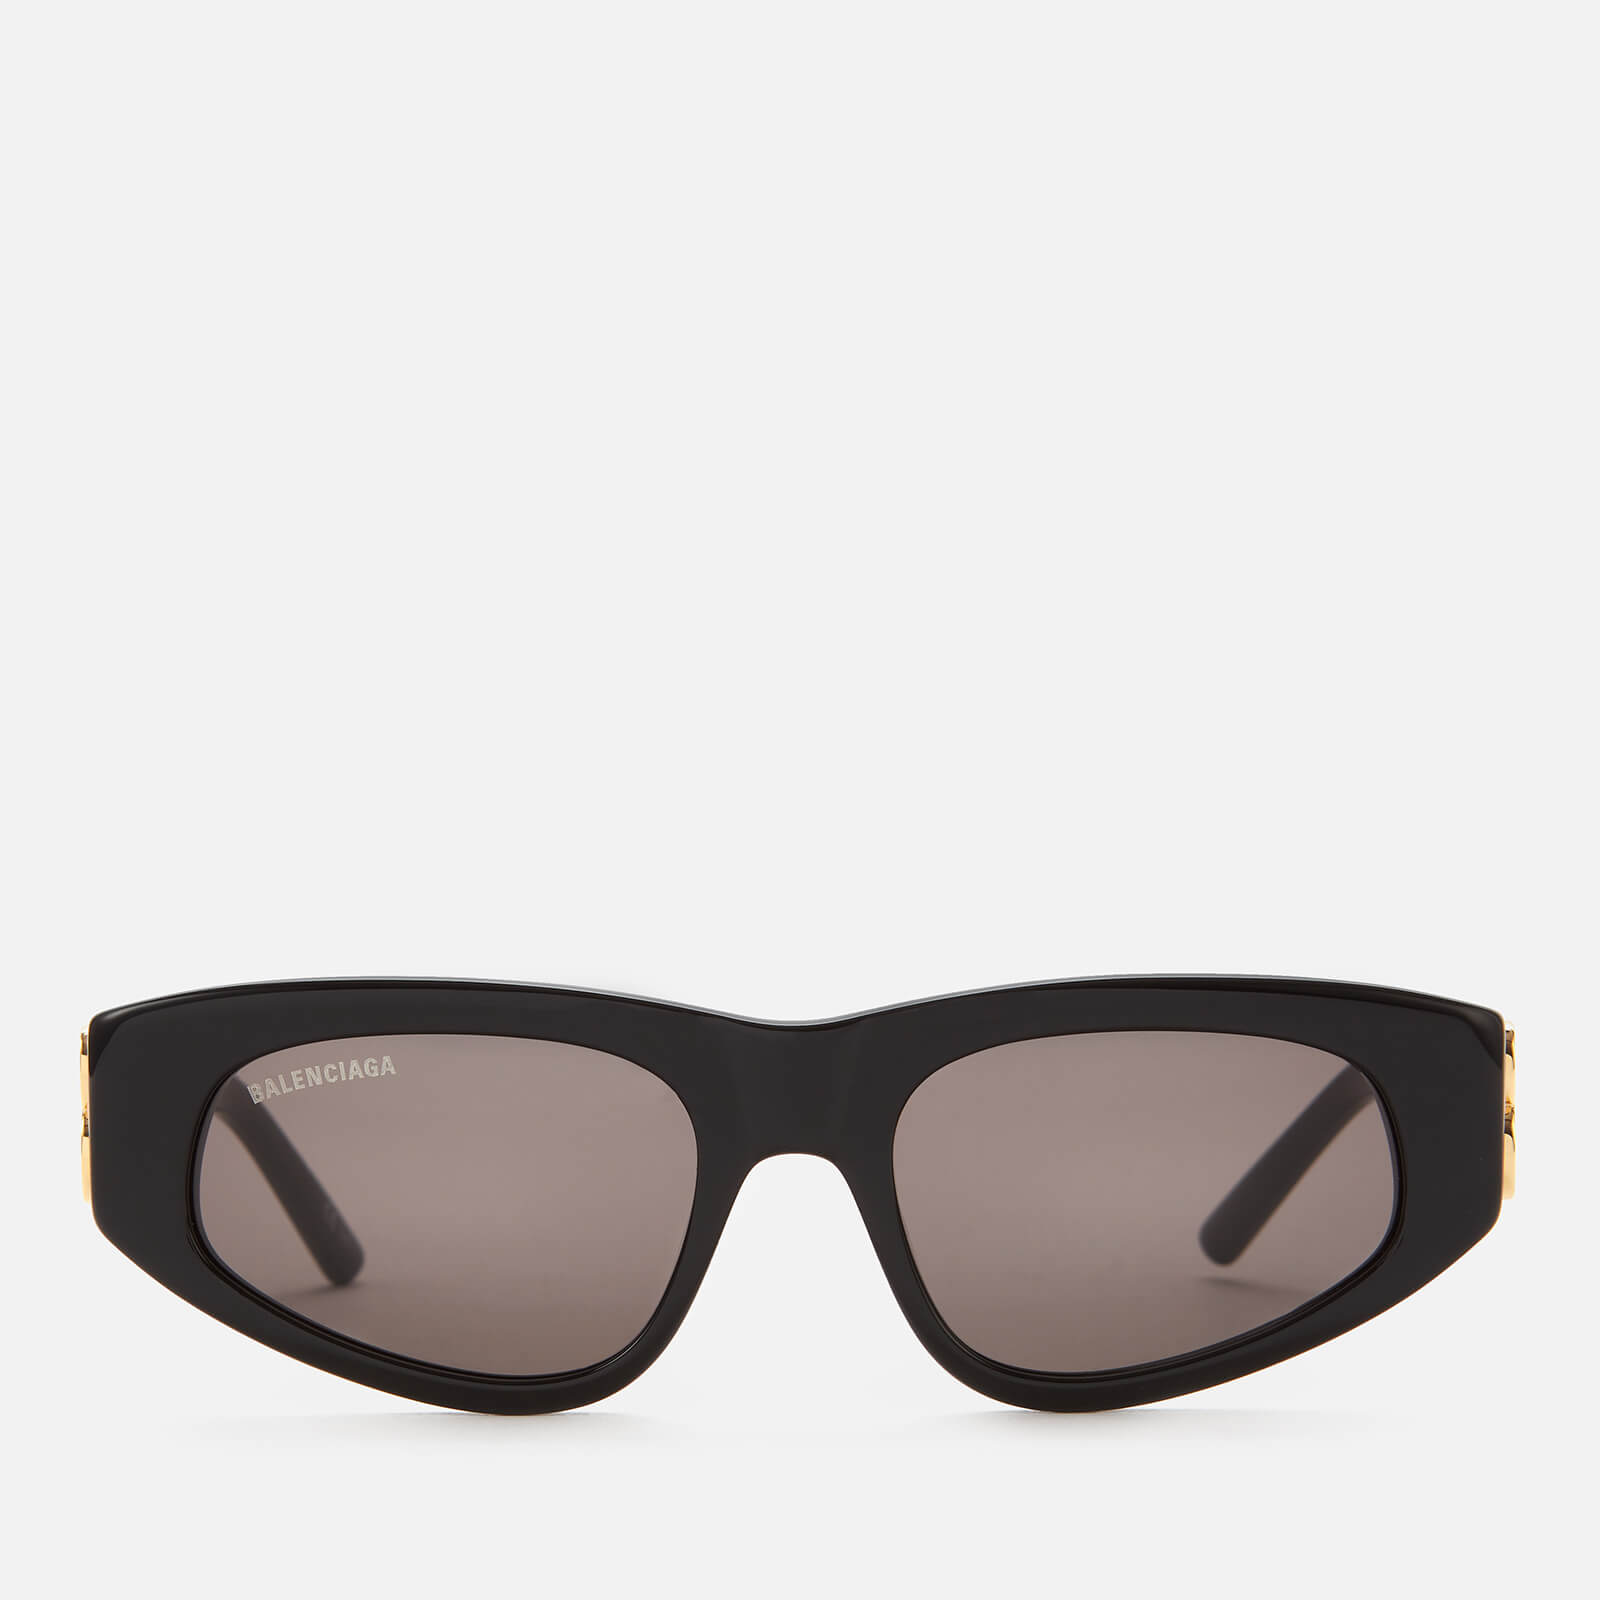 Balenciaga Women's Bb Logo Oval Acetate Sunglasses - Black/Gold